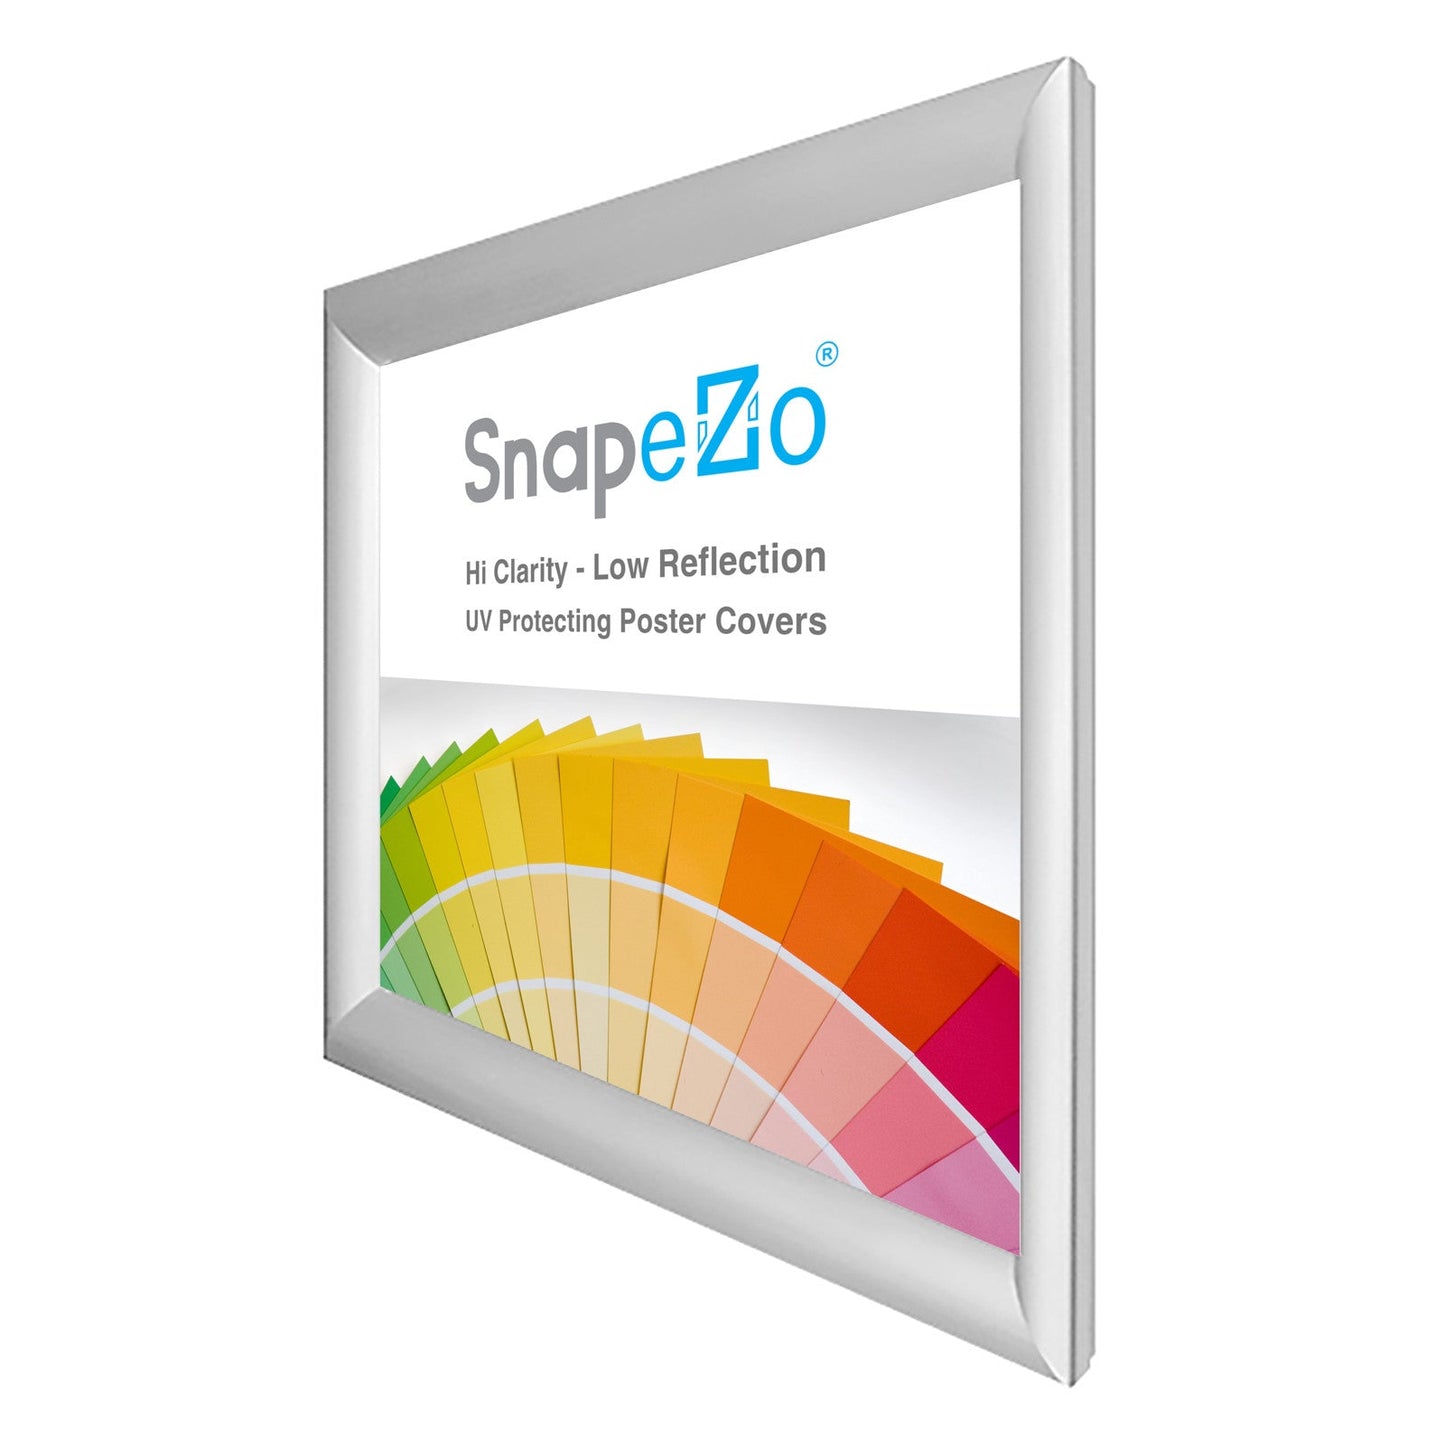 26x26 Silver SnapeZo® Snap Frame - 1.2" Profile